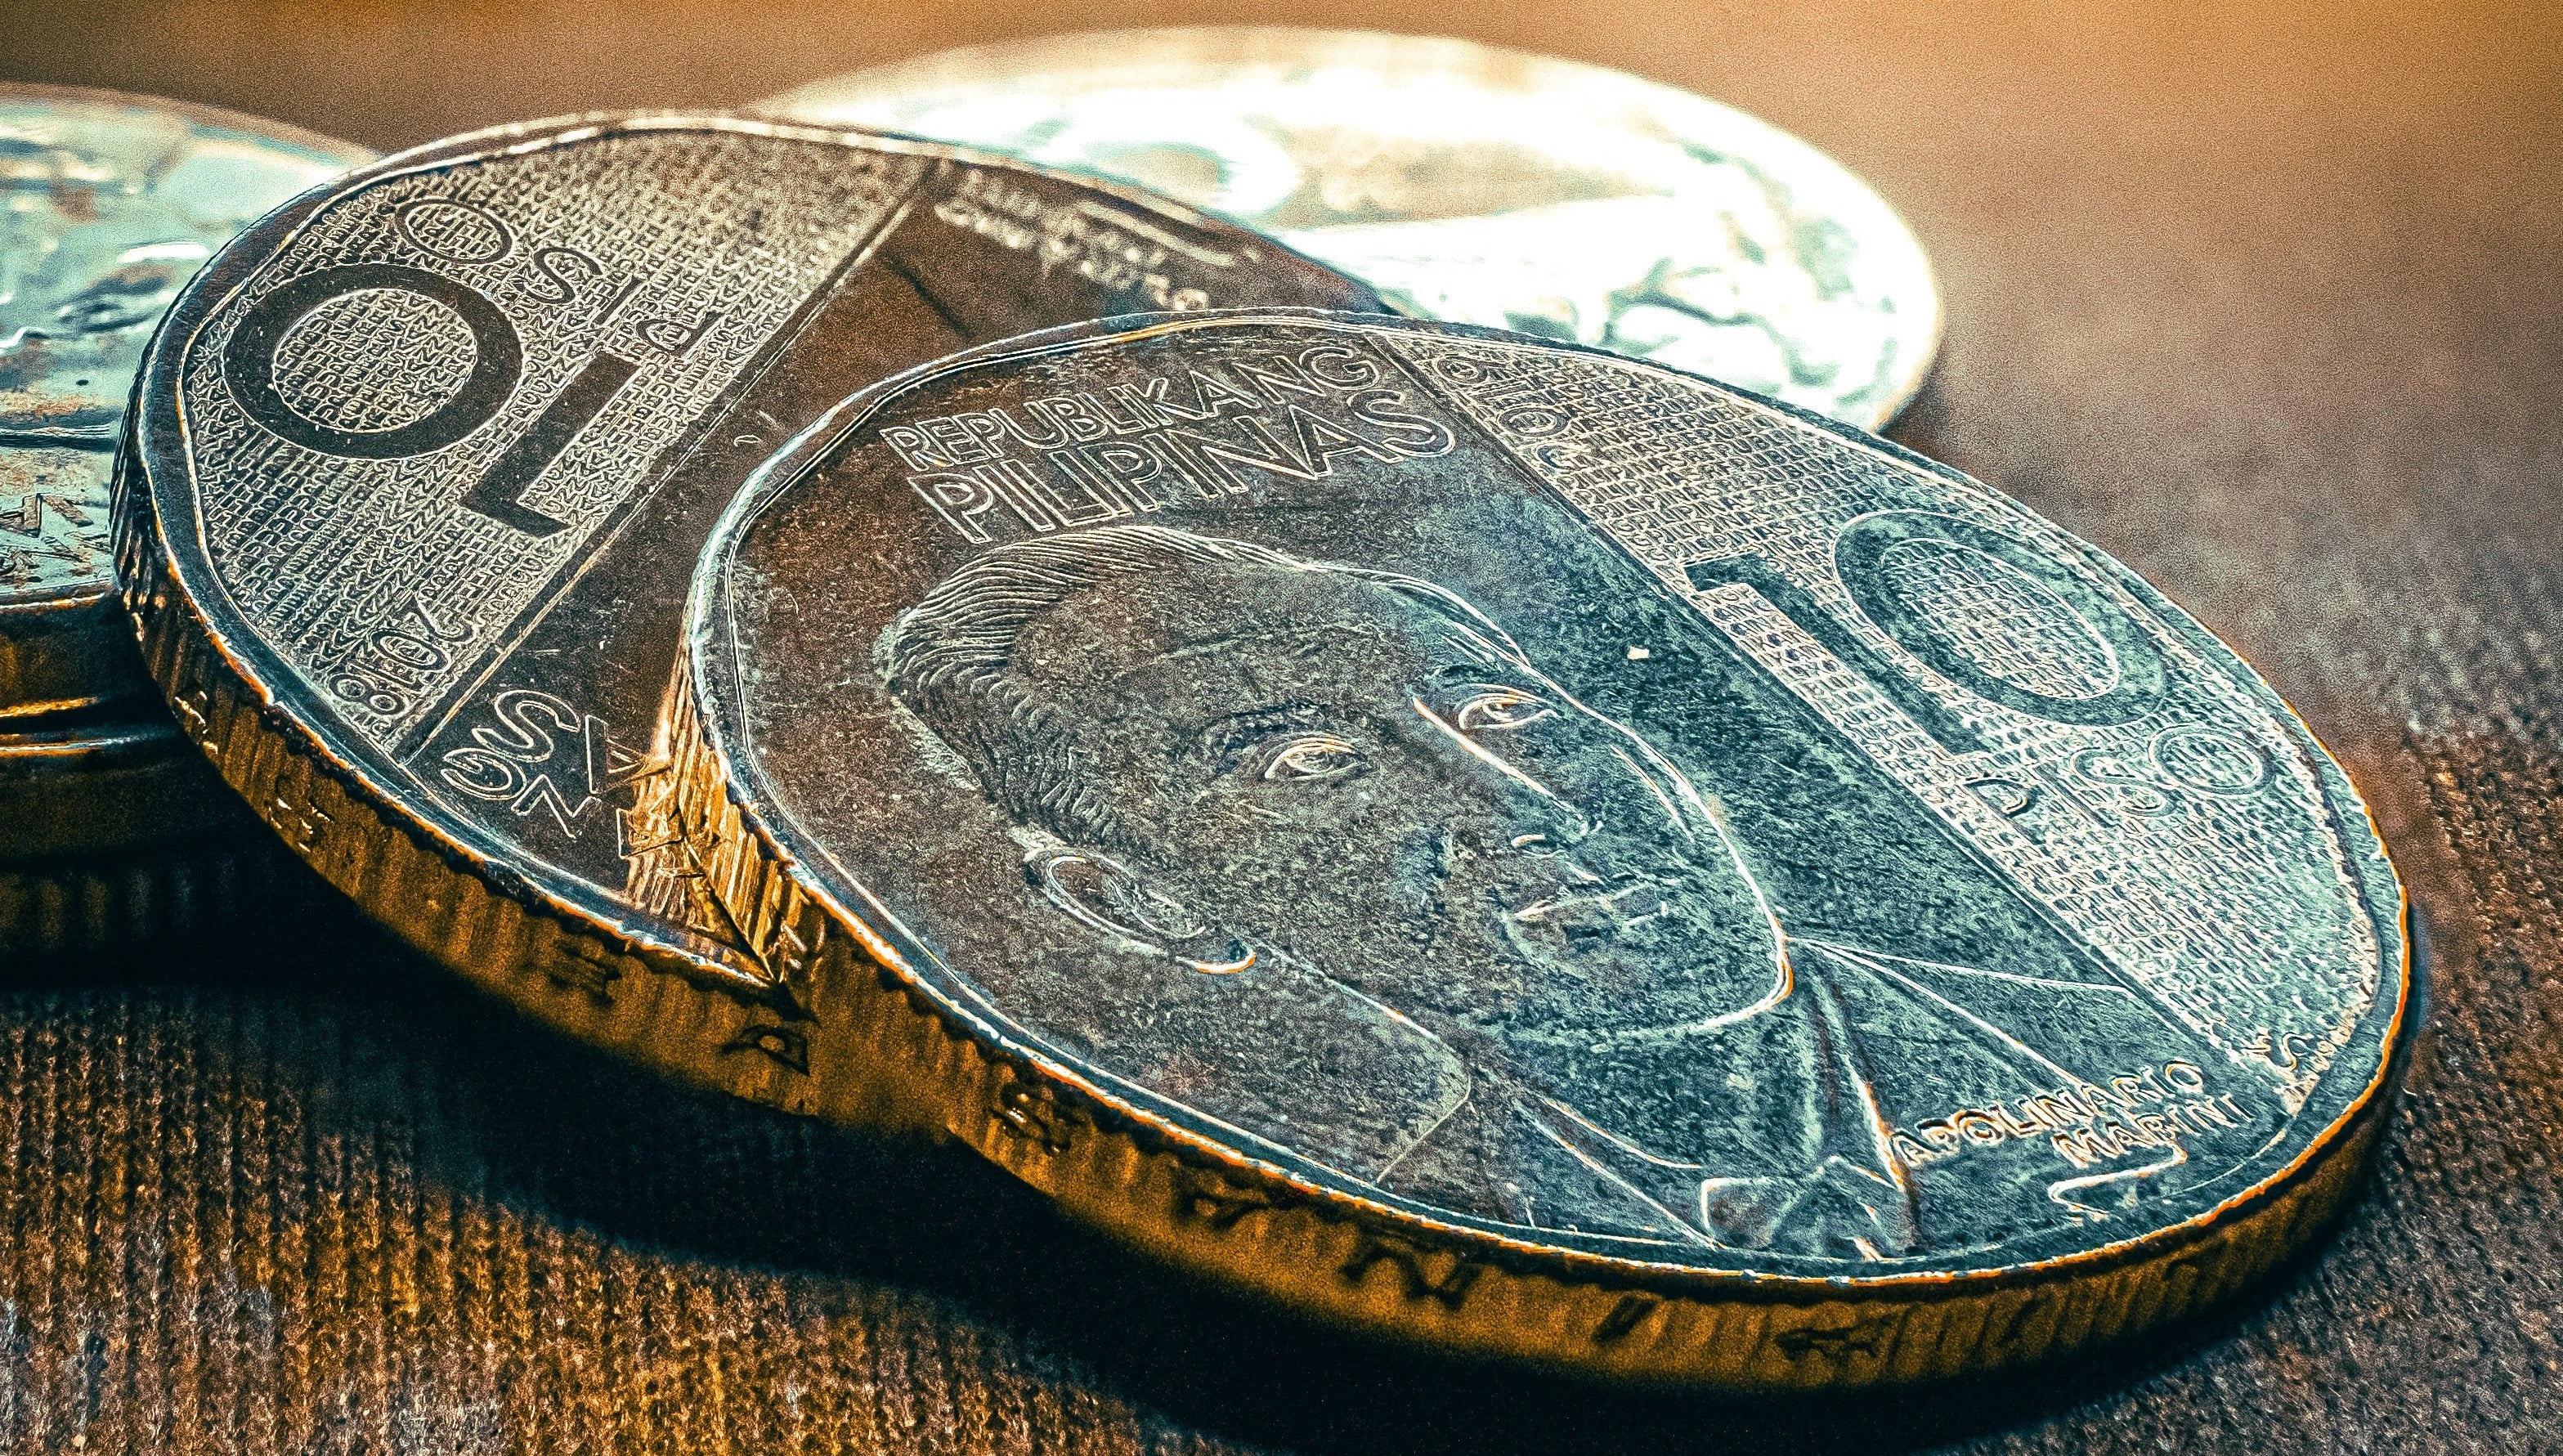 Budget Coin Collecting: Top 10 Cheap Collector Coins